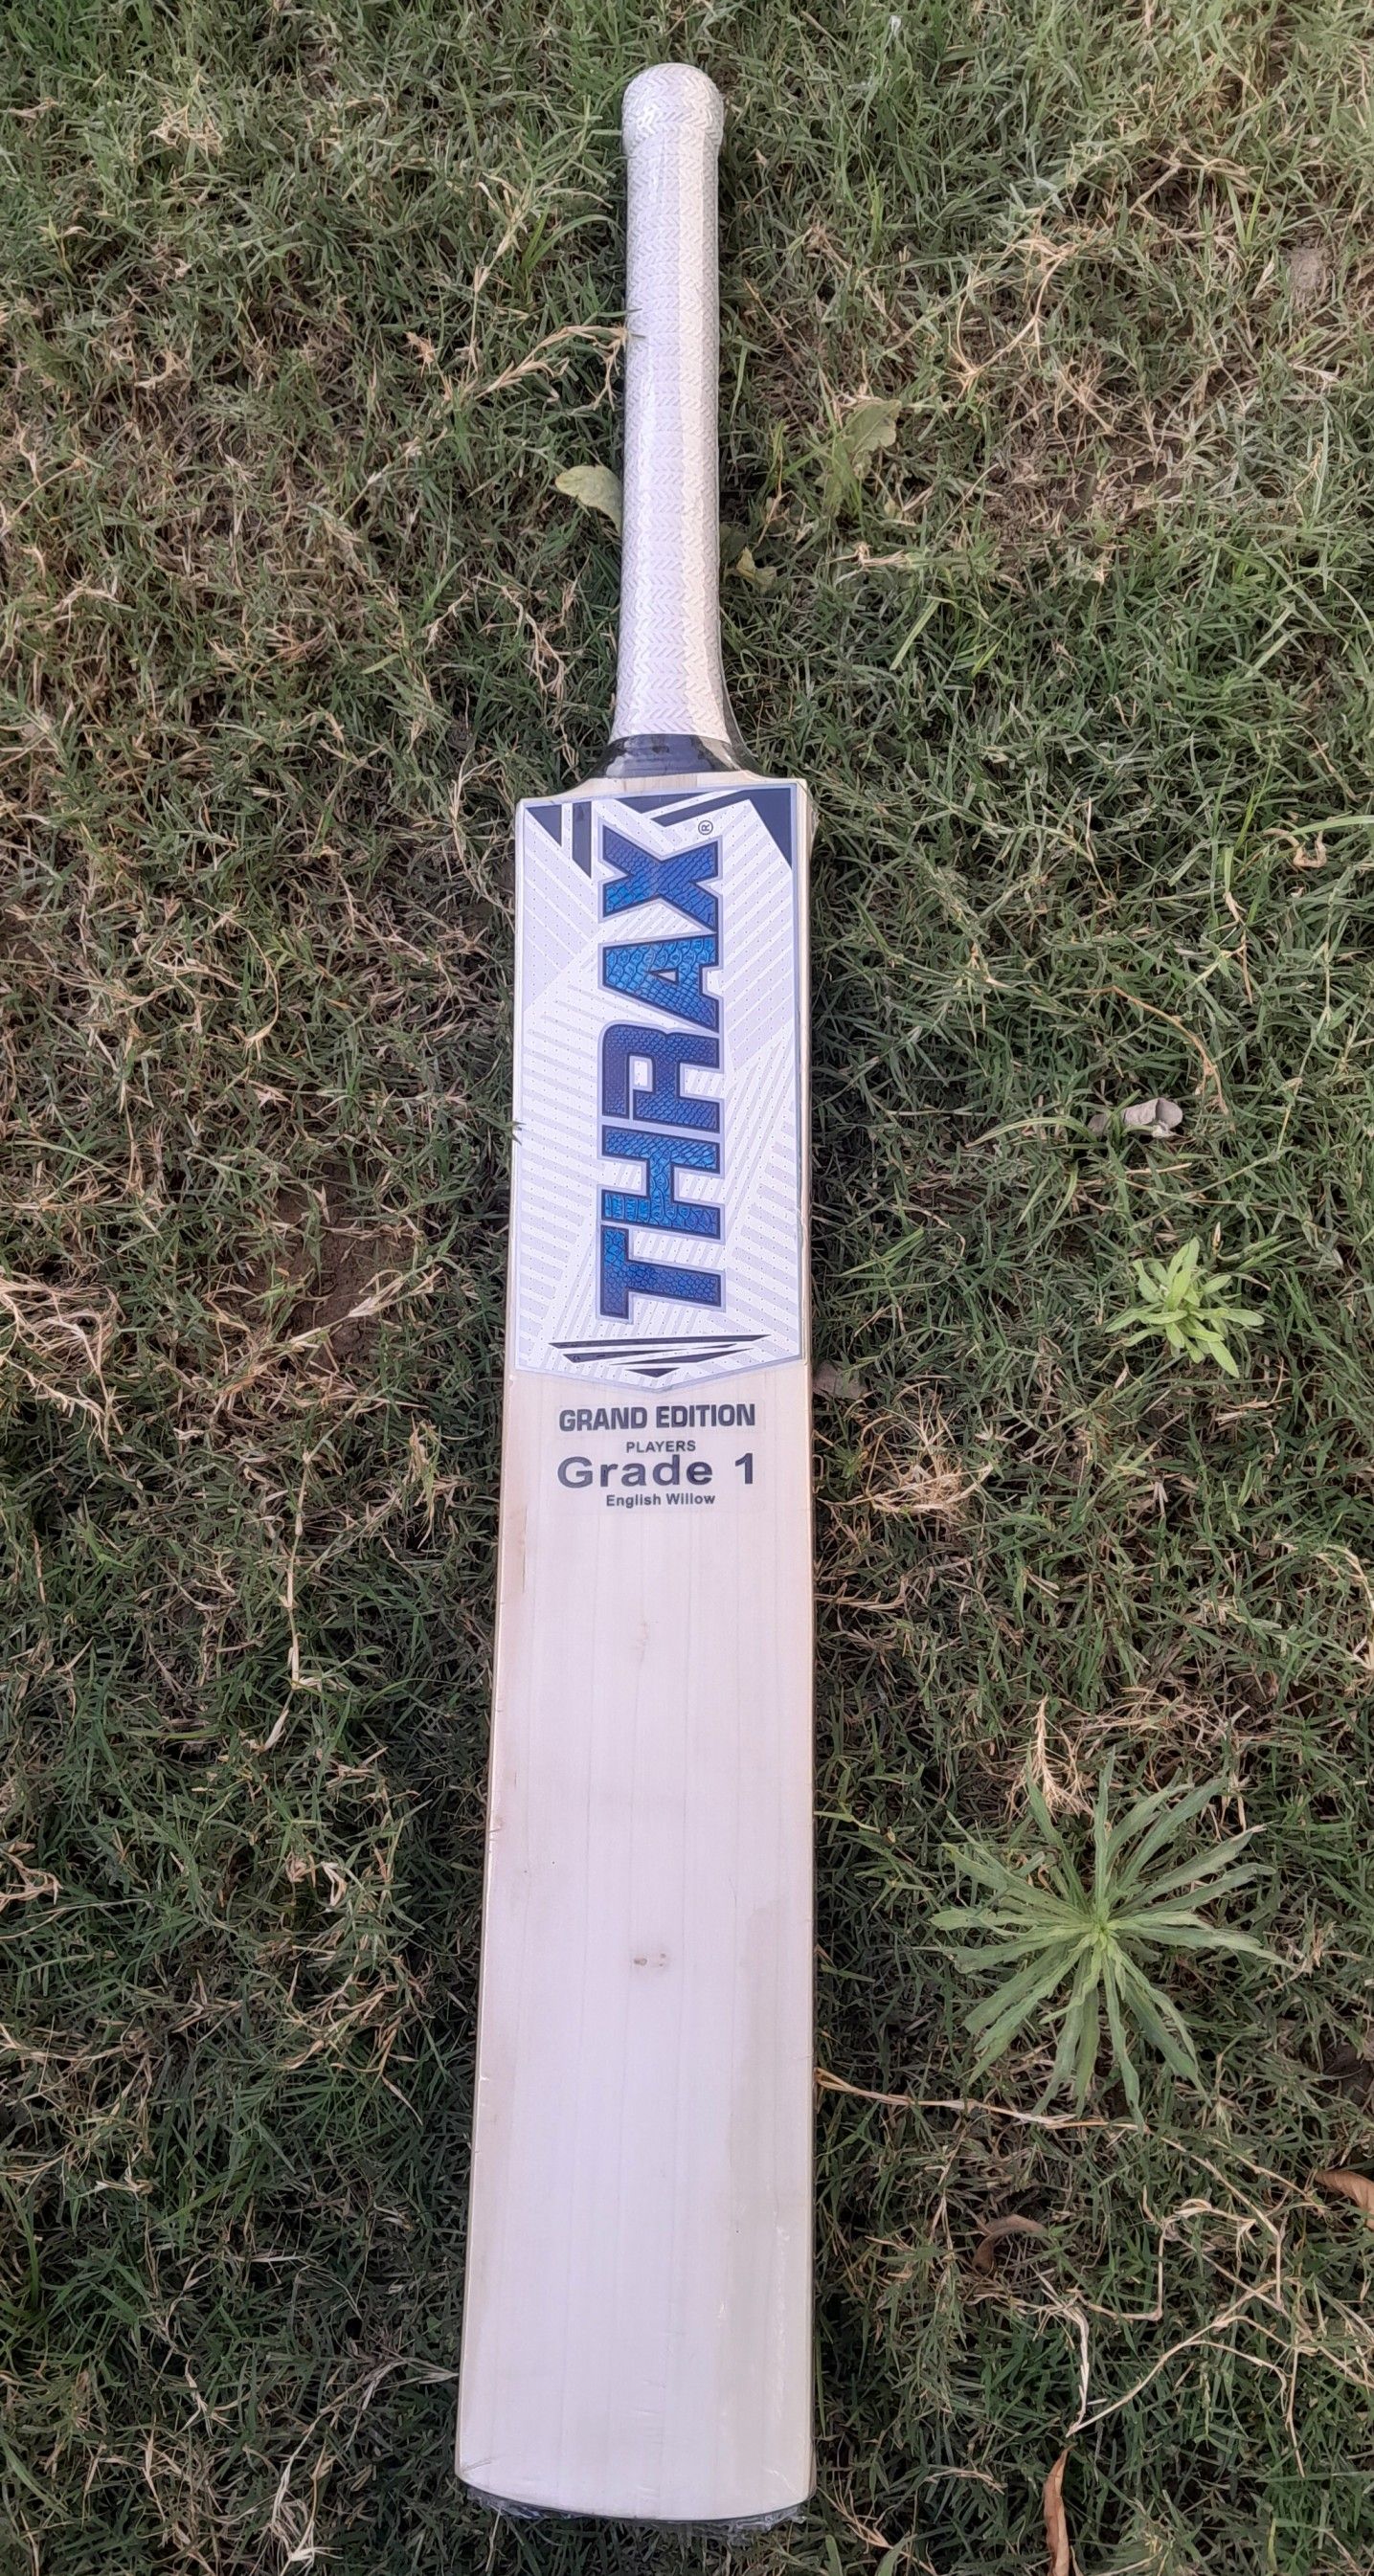 Thrax Grand Edition English Willow Cricket Bat